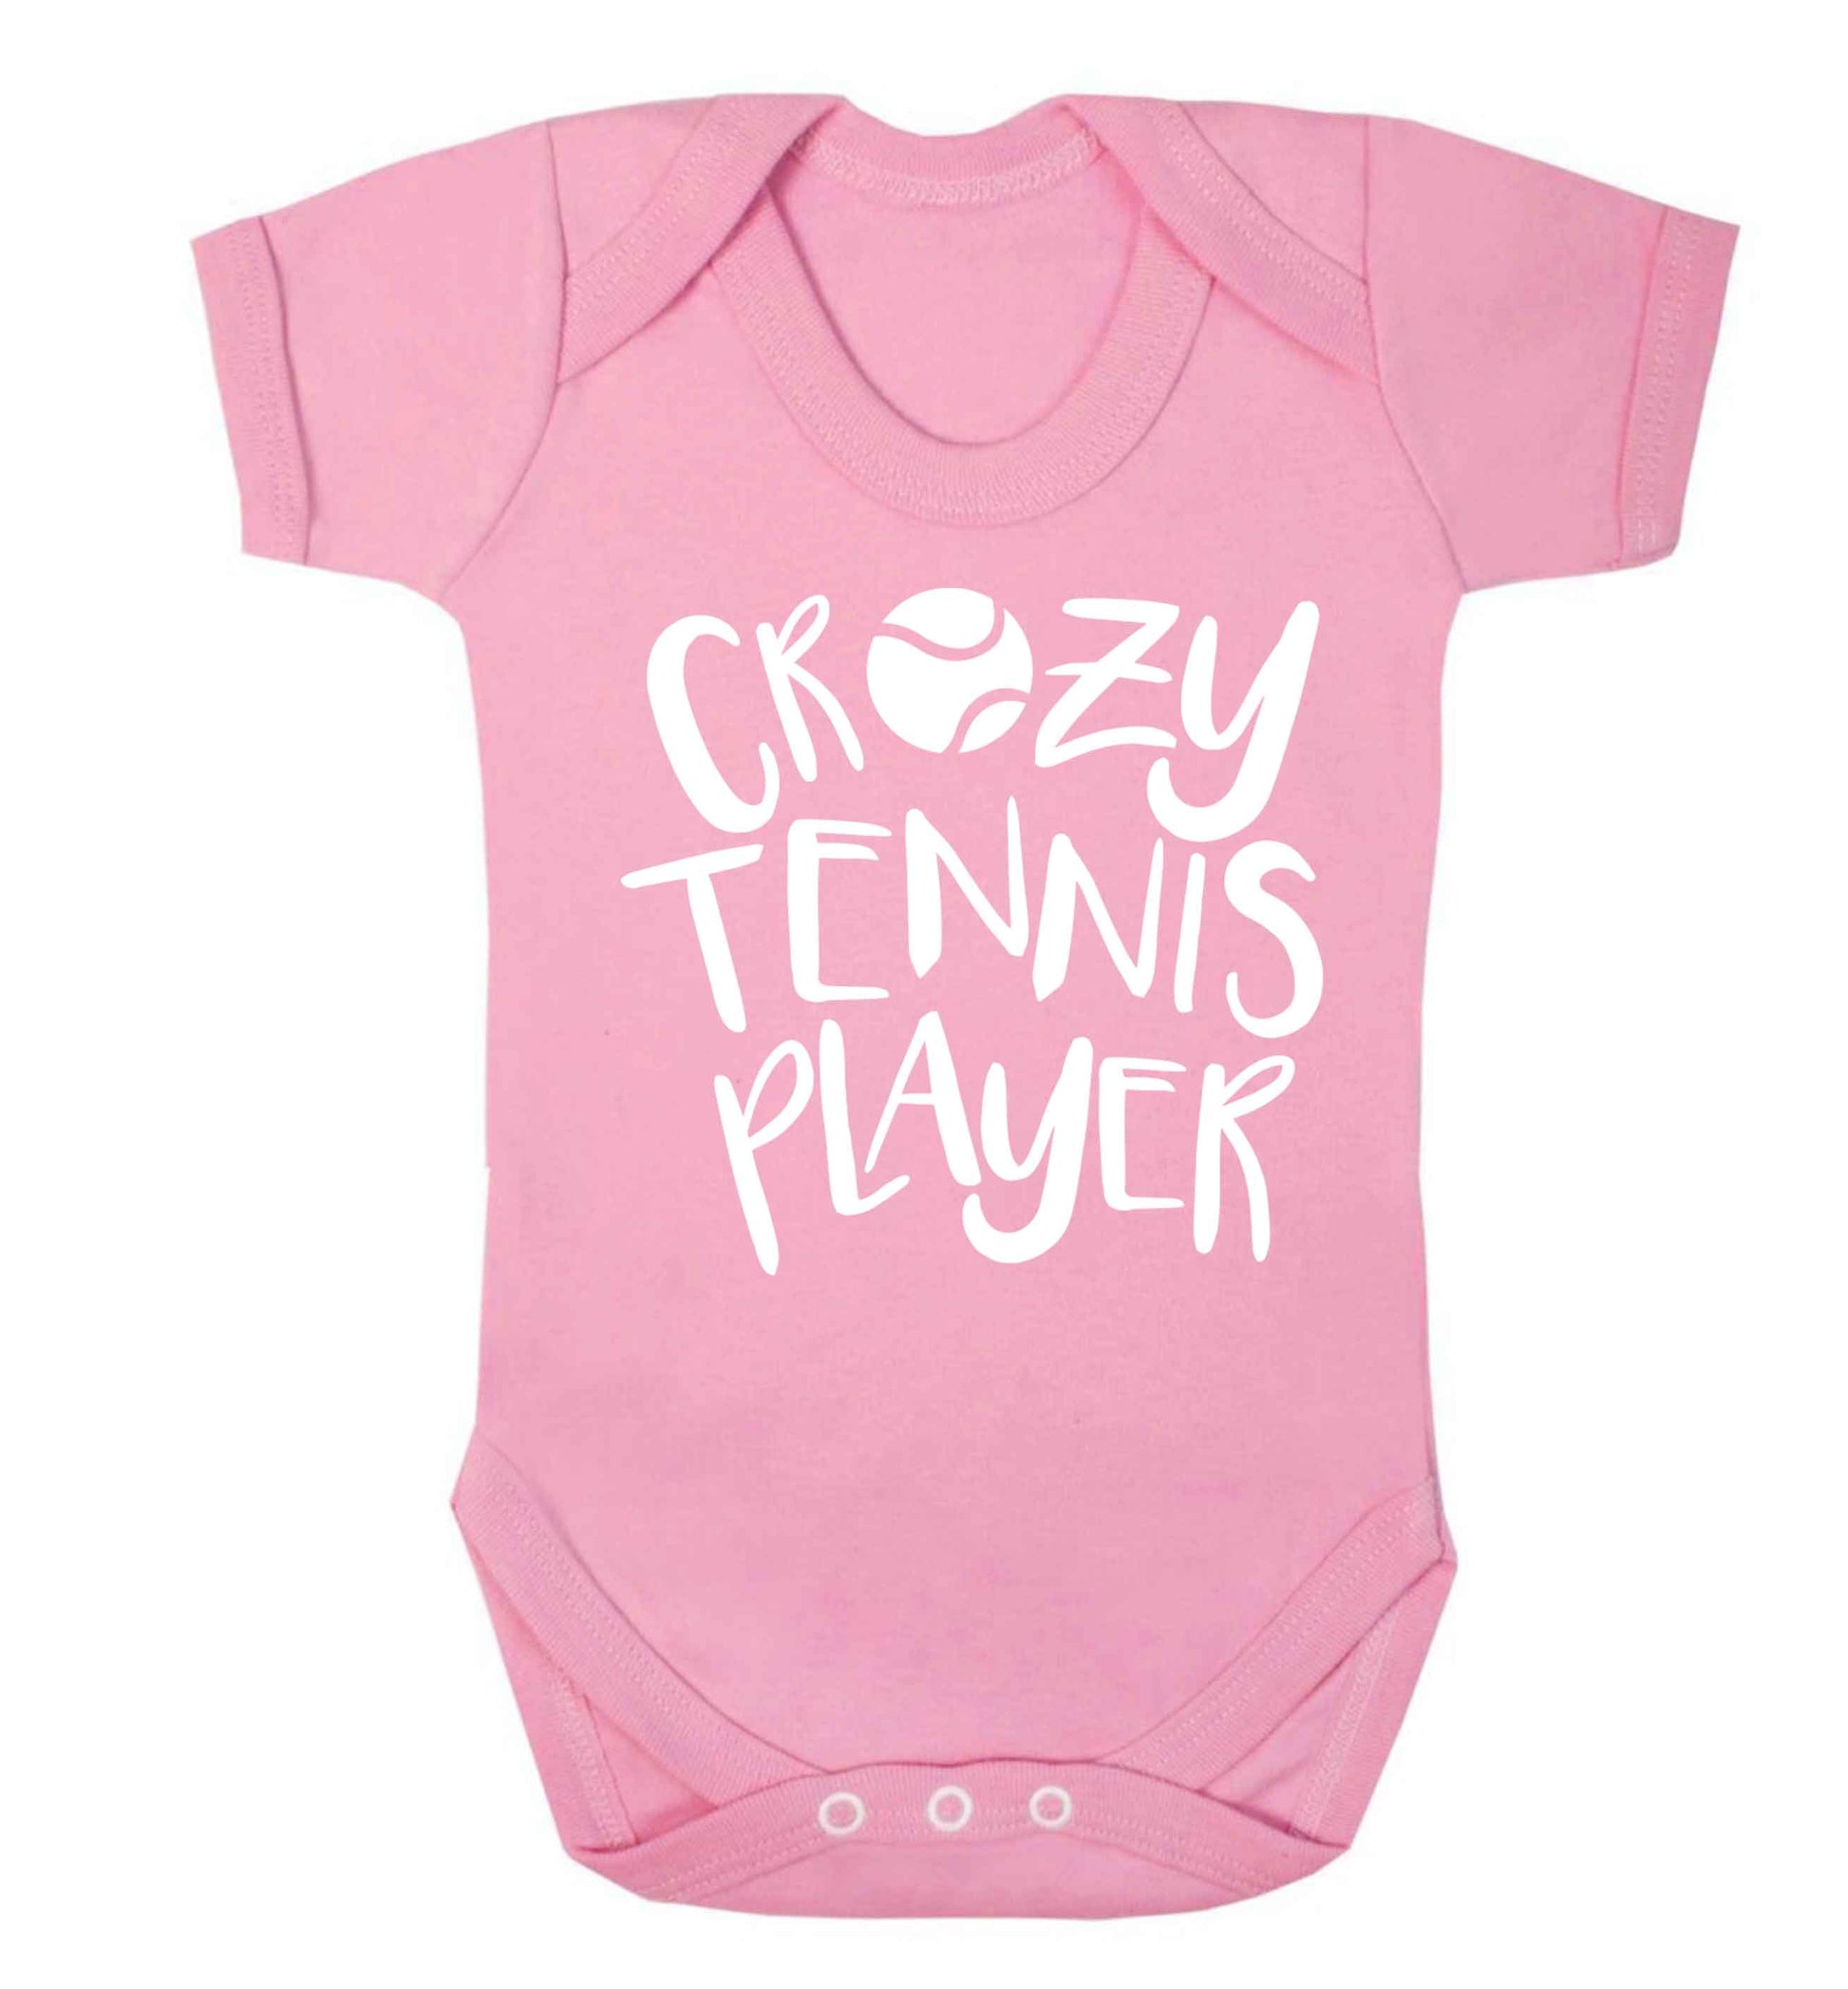 Crazy tennis player Baby Vest pale pink 18-24 months